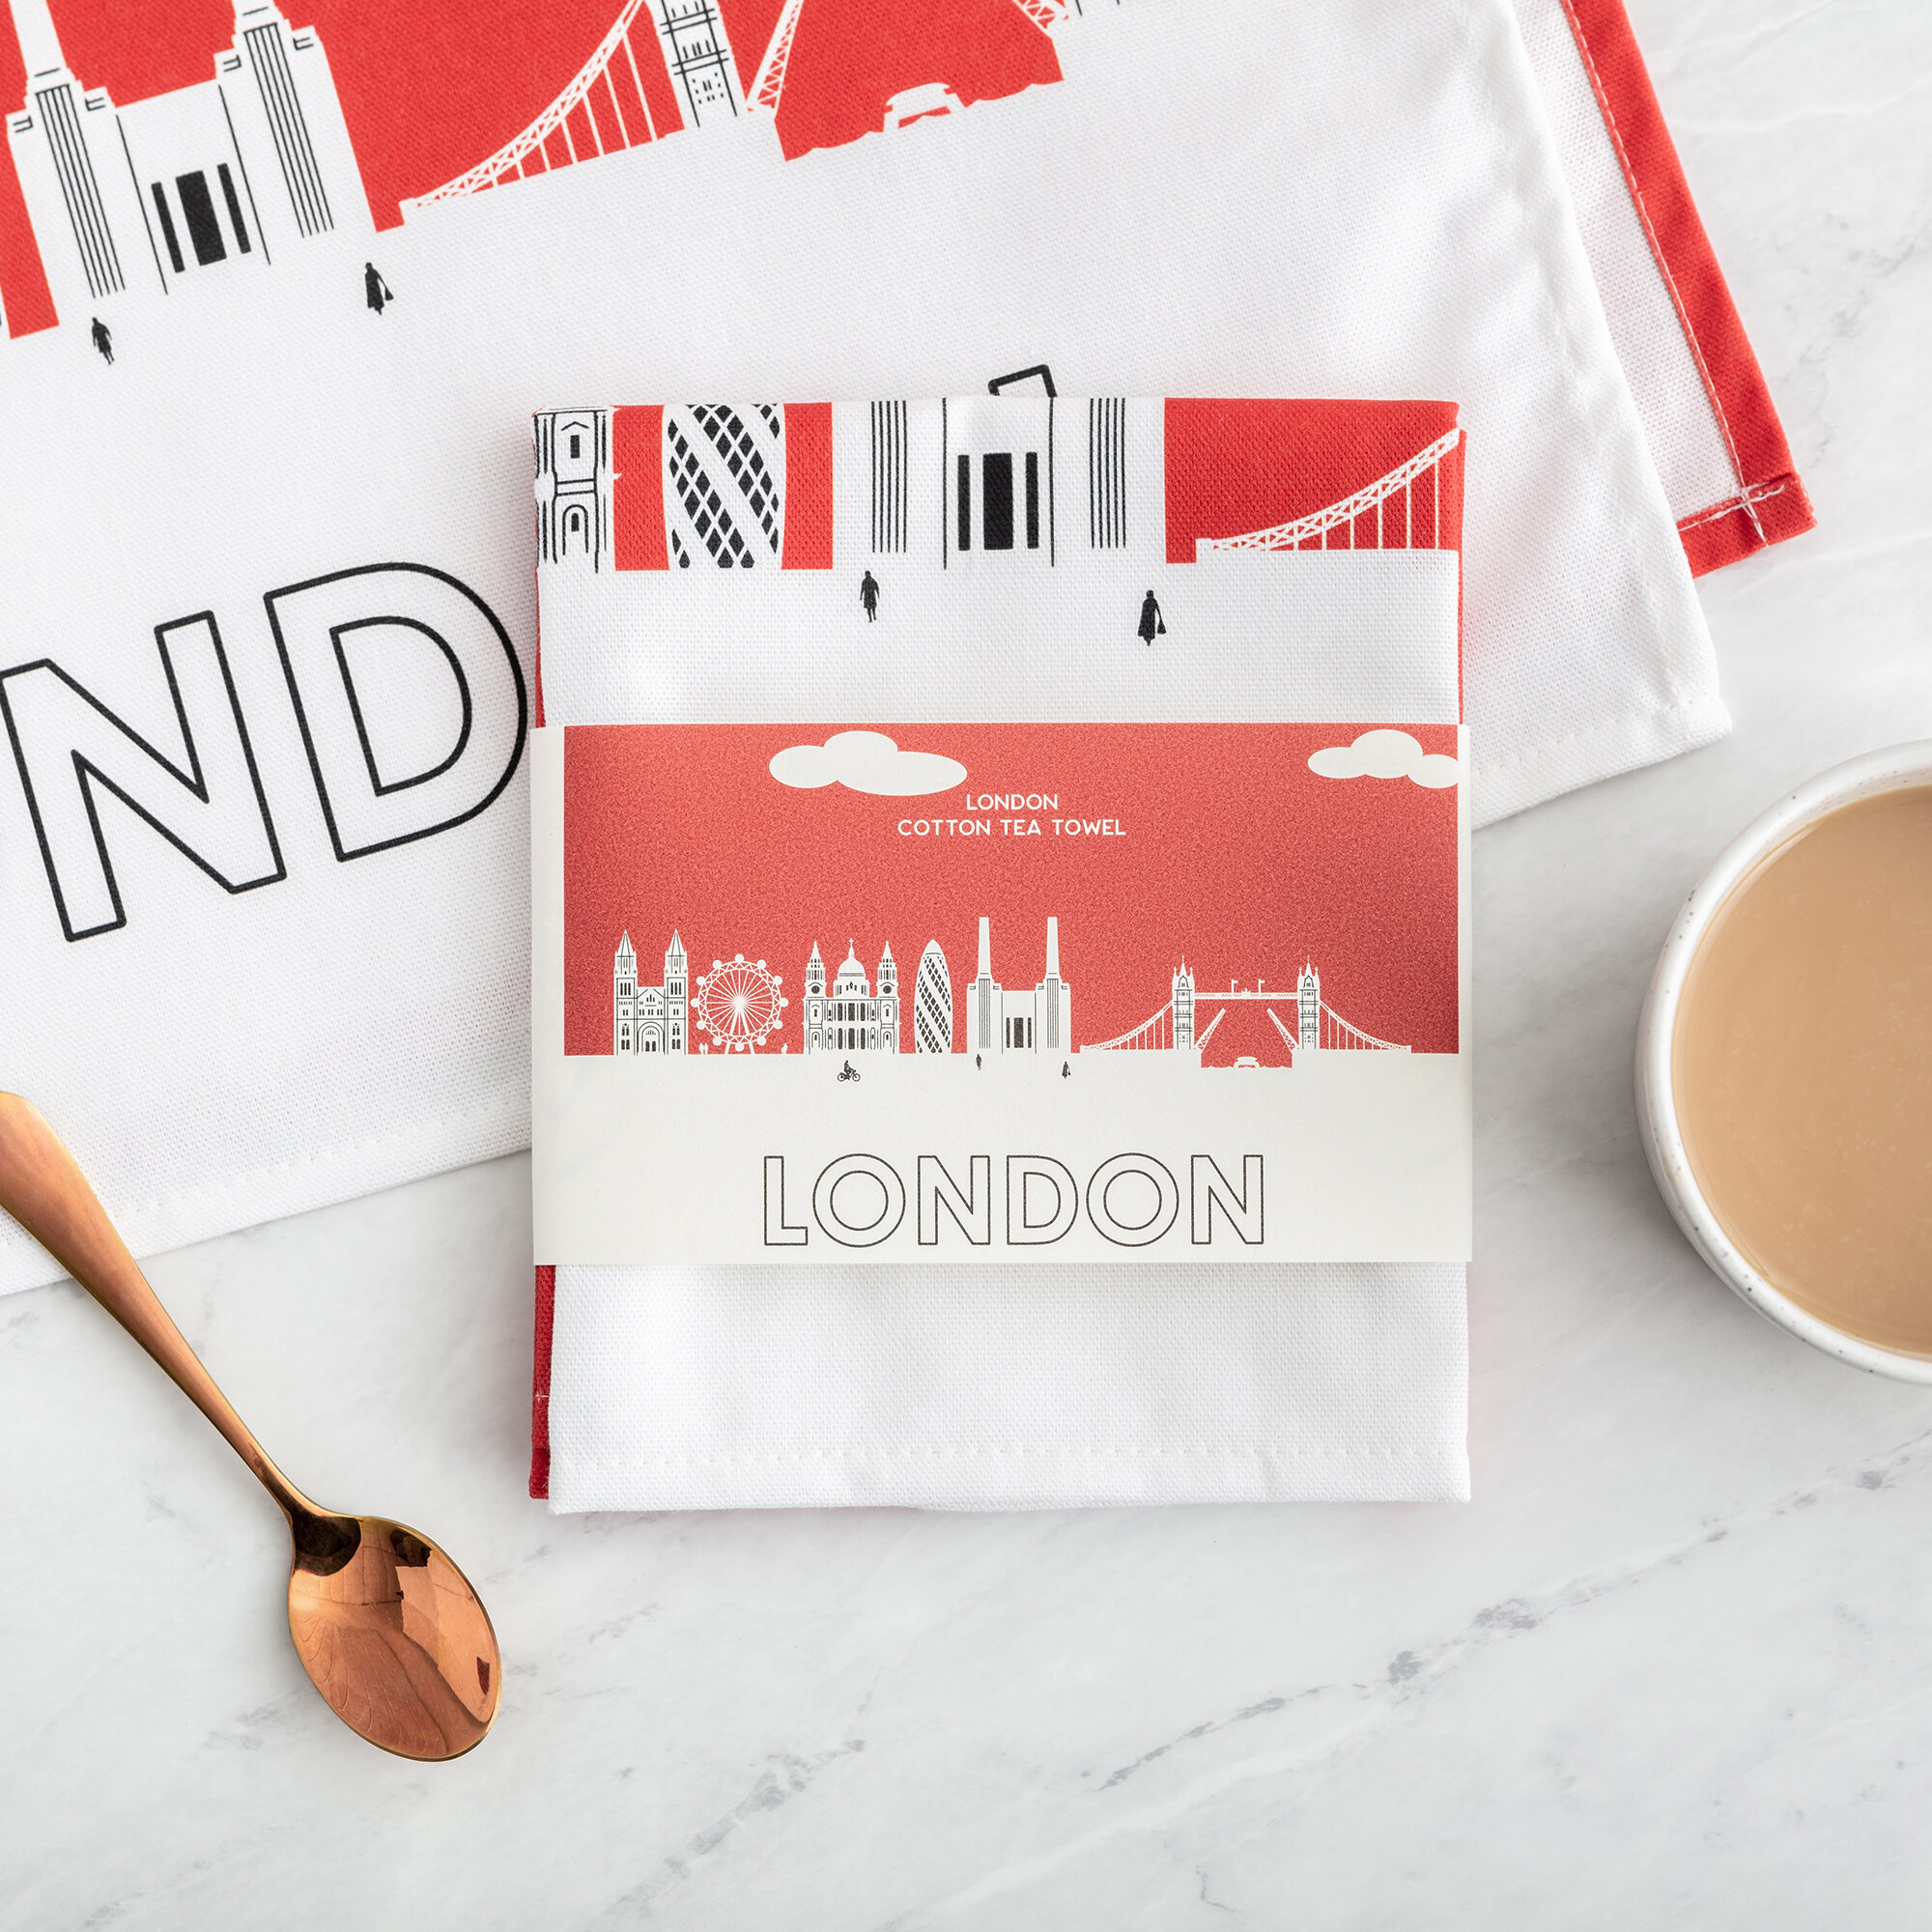 London Tea Towel Folded Snapdragon Designs.jpg